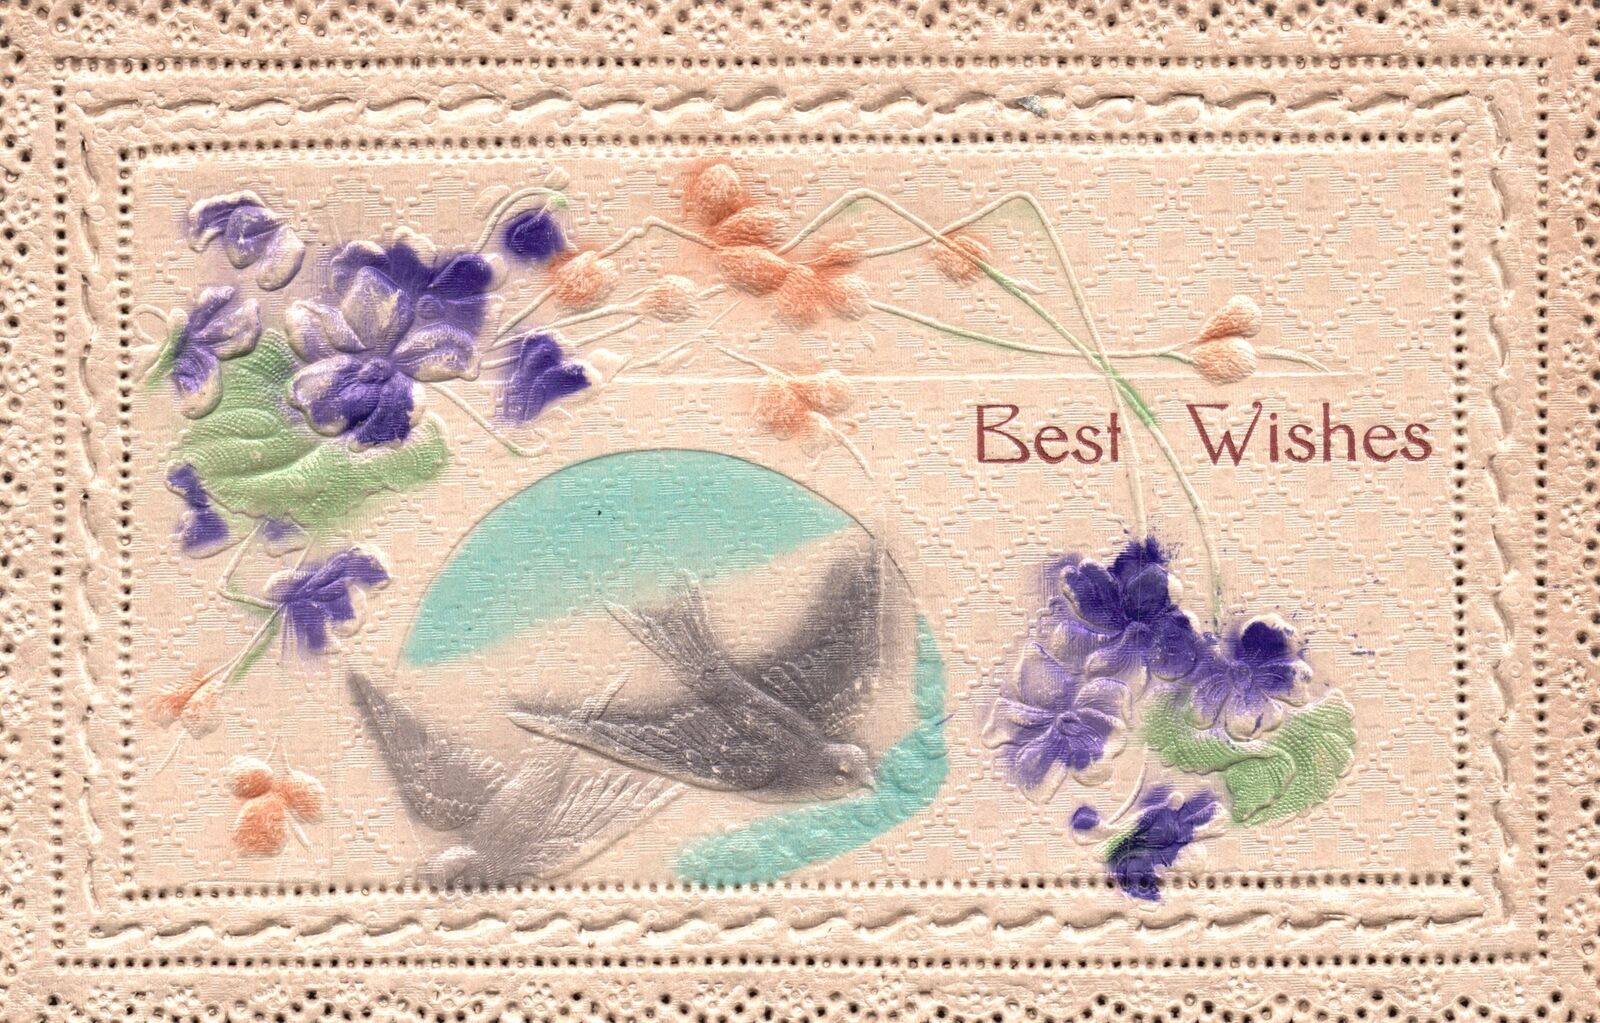 Vintage Postcard Best Wishes Birds and Flowers Embossed Greetings Souvenir Card